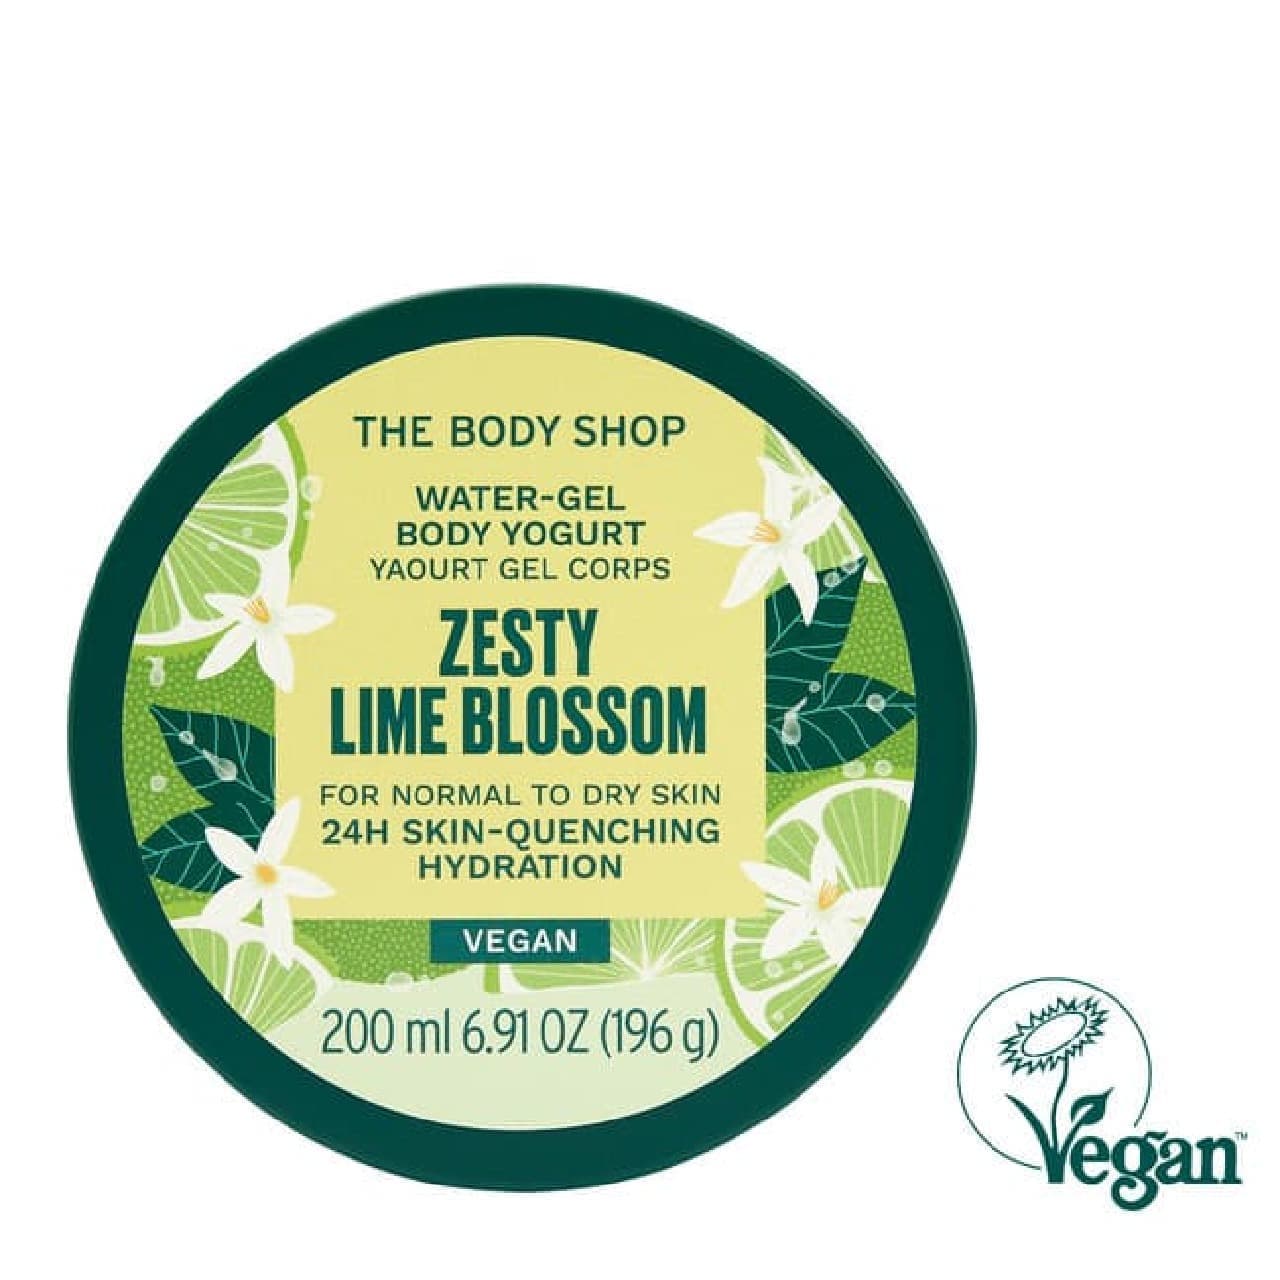 The Body Shop "Zesty LIM Blossom" and "Lucious LYC" summer-oriented body yogurt and shampoo scrub, etc.